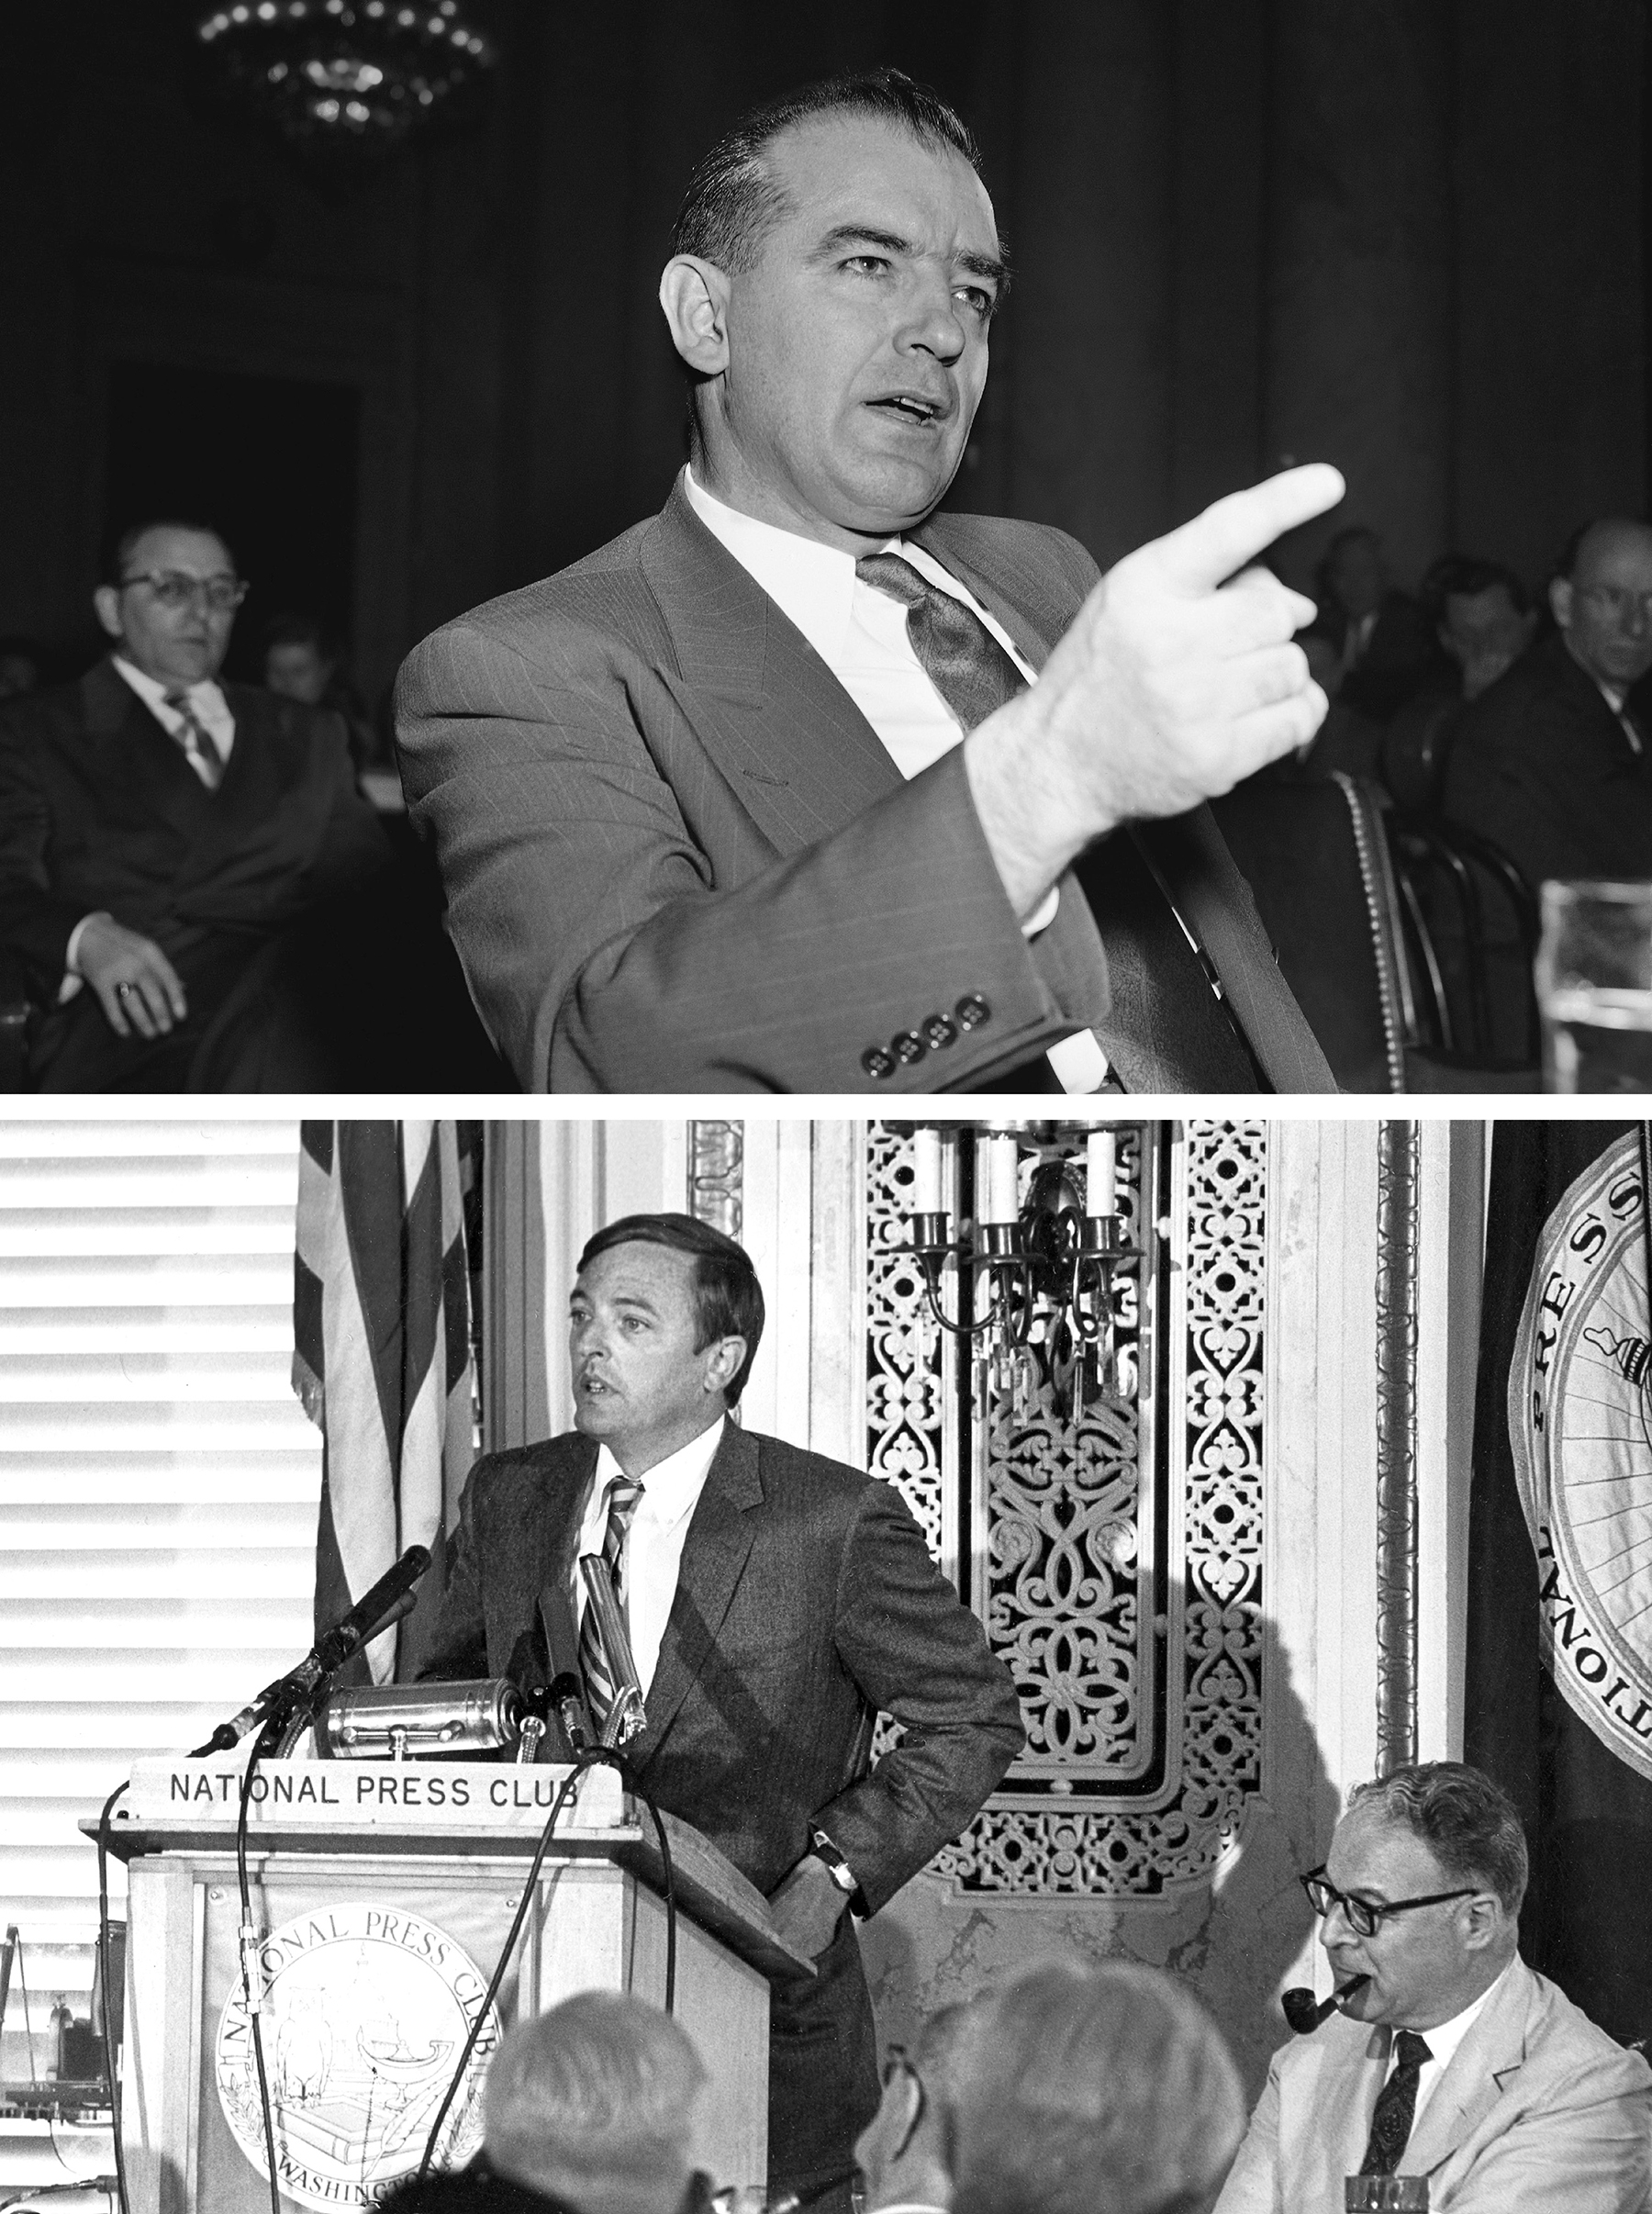 Photos of Sen. Joseph McCarthy and William F. Buckley Jr.